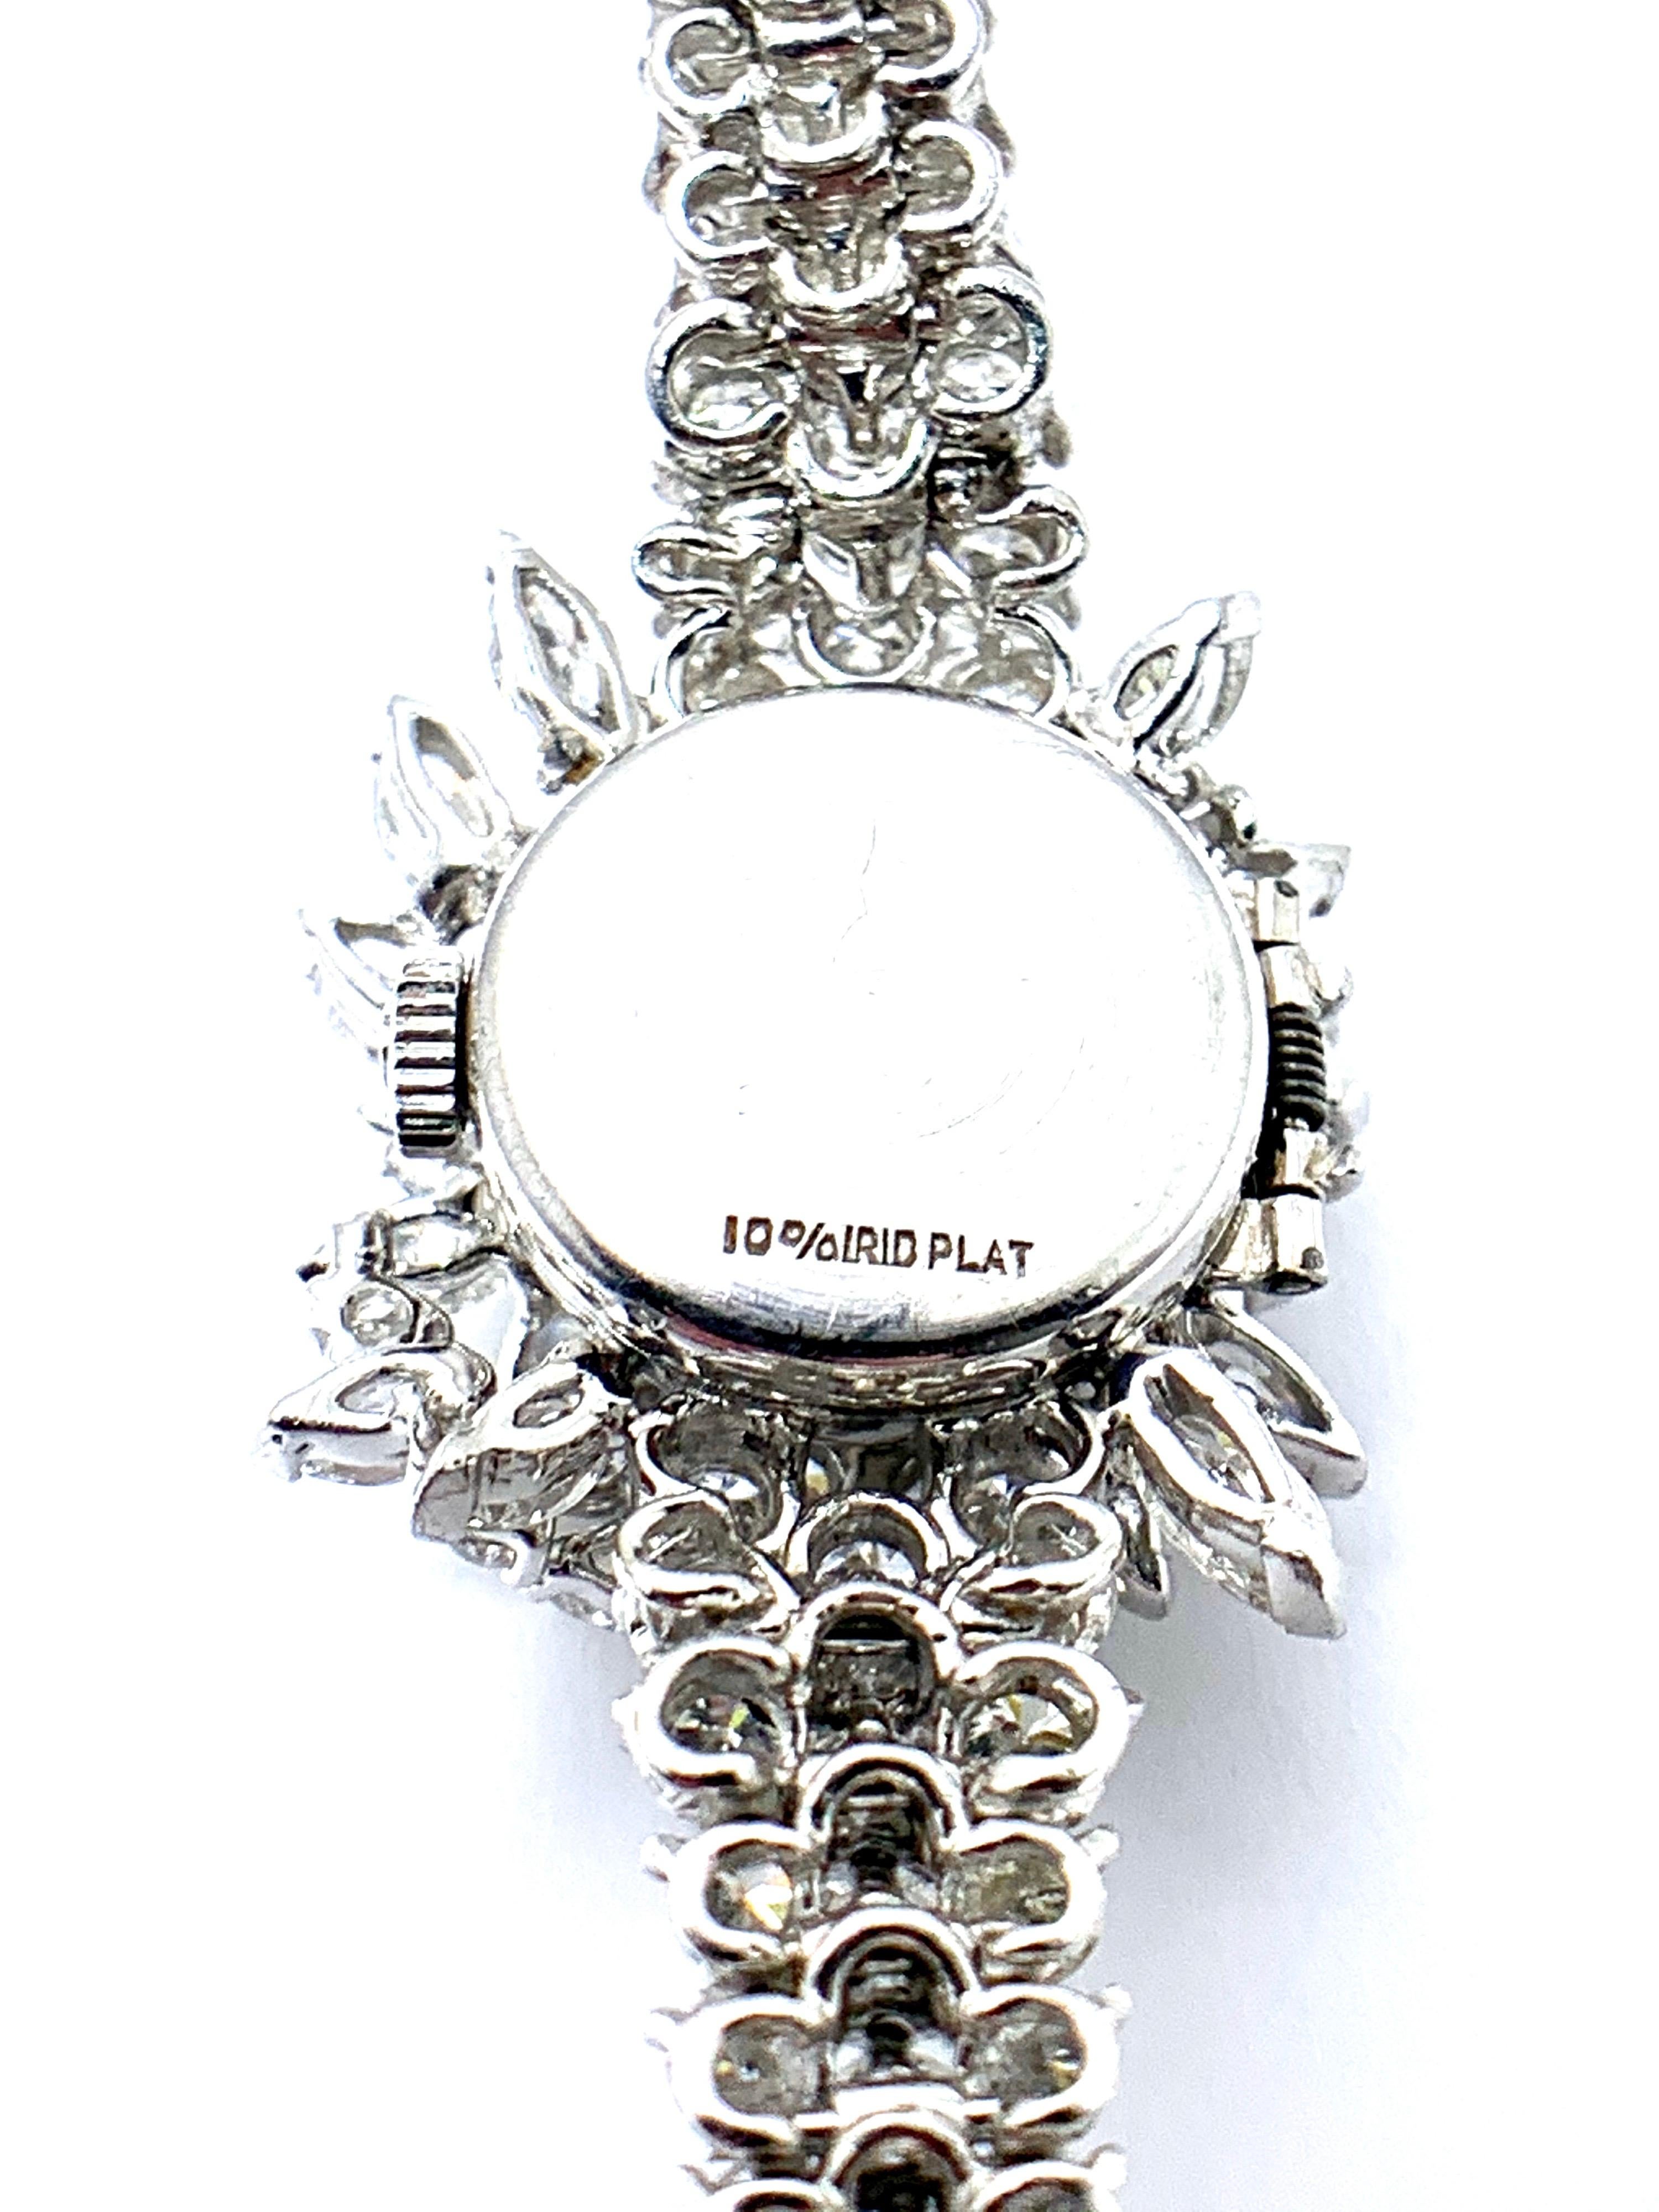 diamond encrusted watches